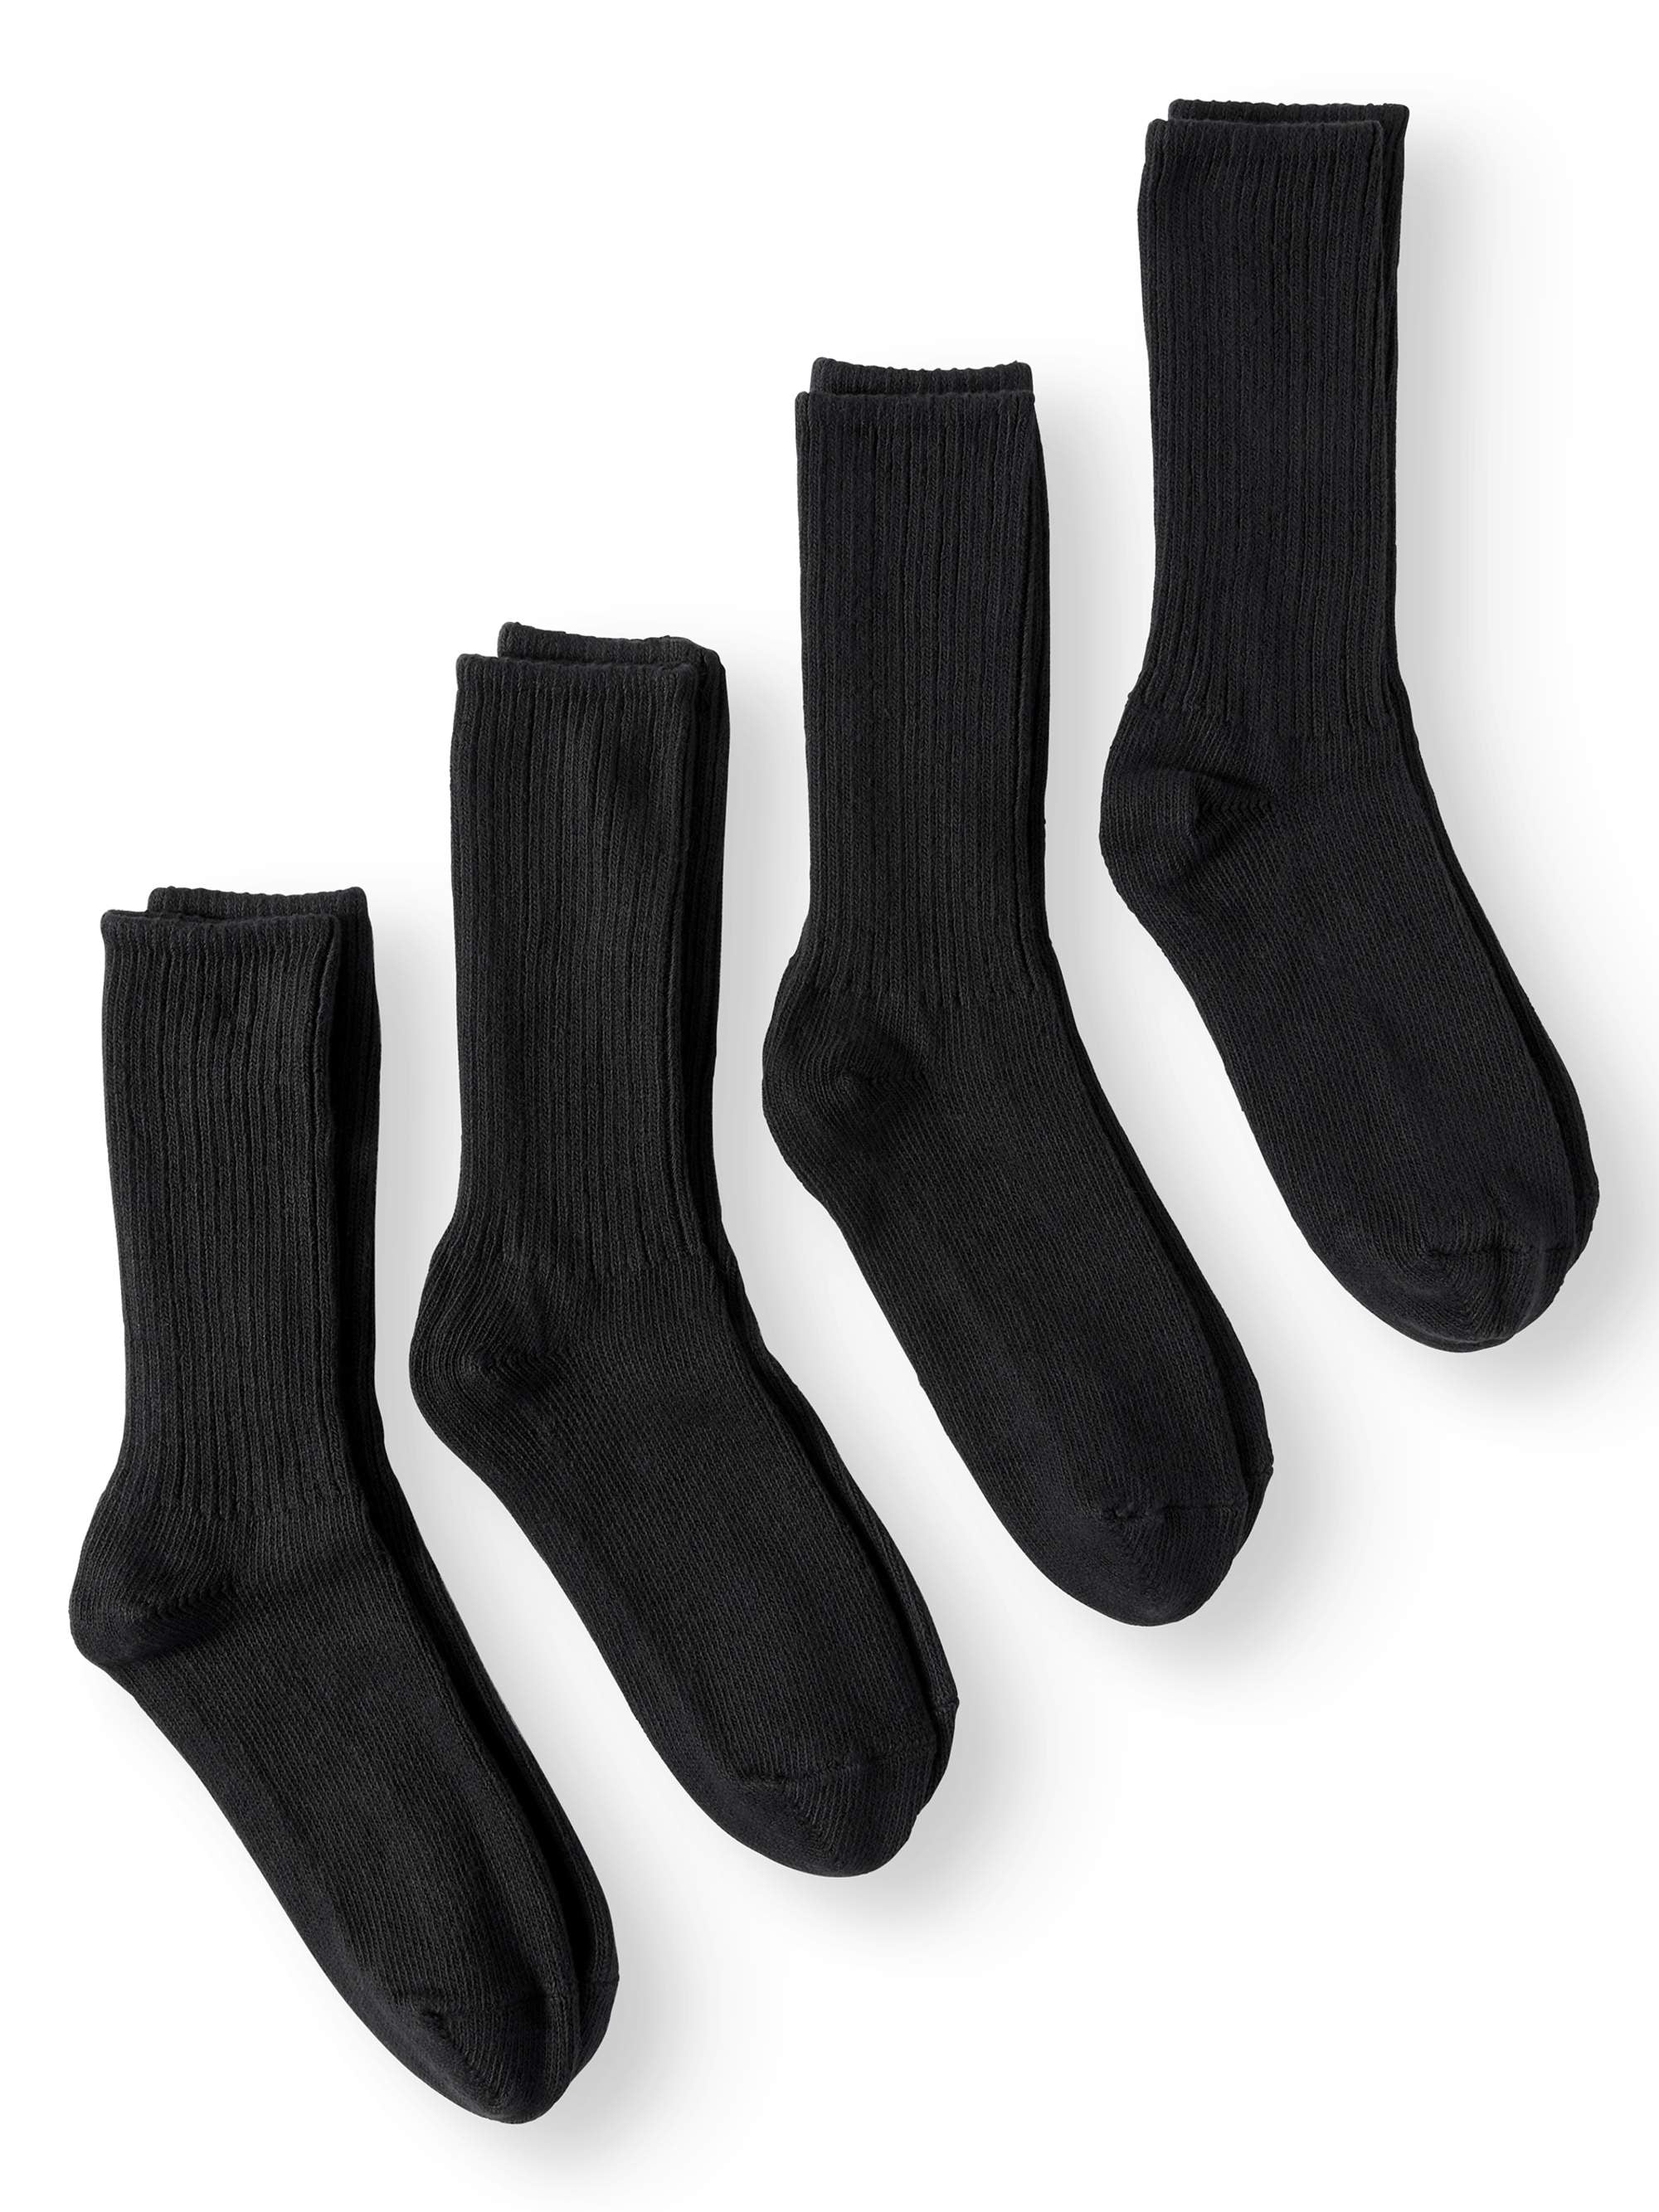 Organic Cotton Girls Knee High Socks by Jefferies Socks Size 7-8.5 